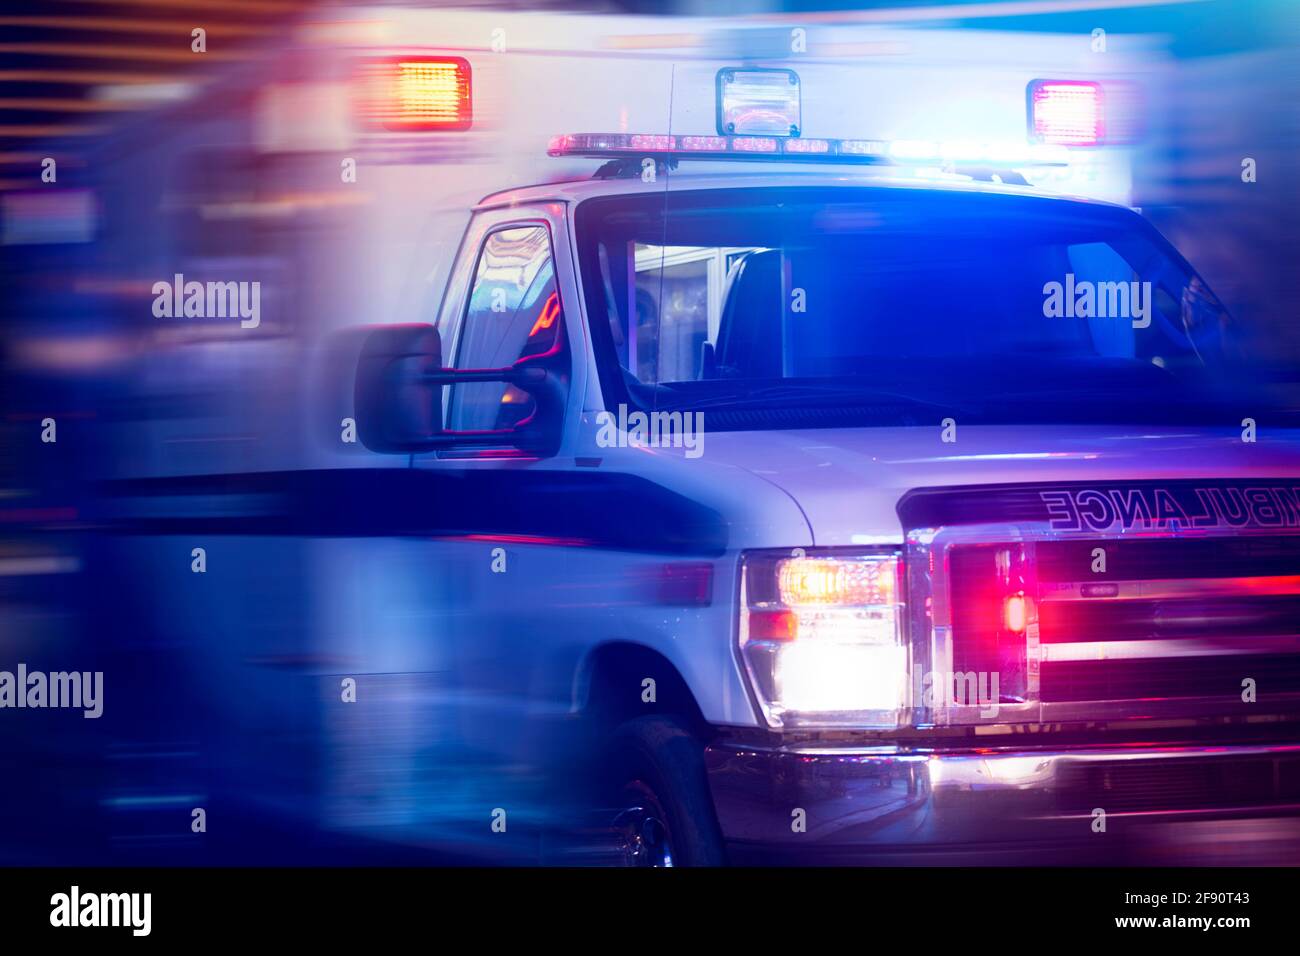 Luces de ambulancia fotografías e imágenes de alta resolución - Alamy